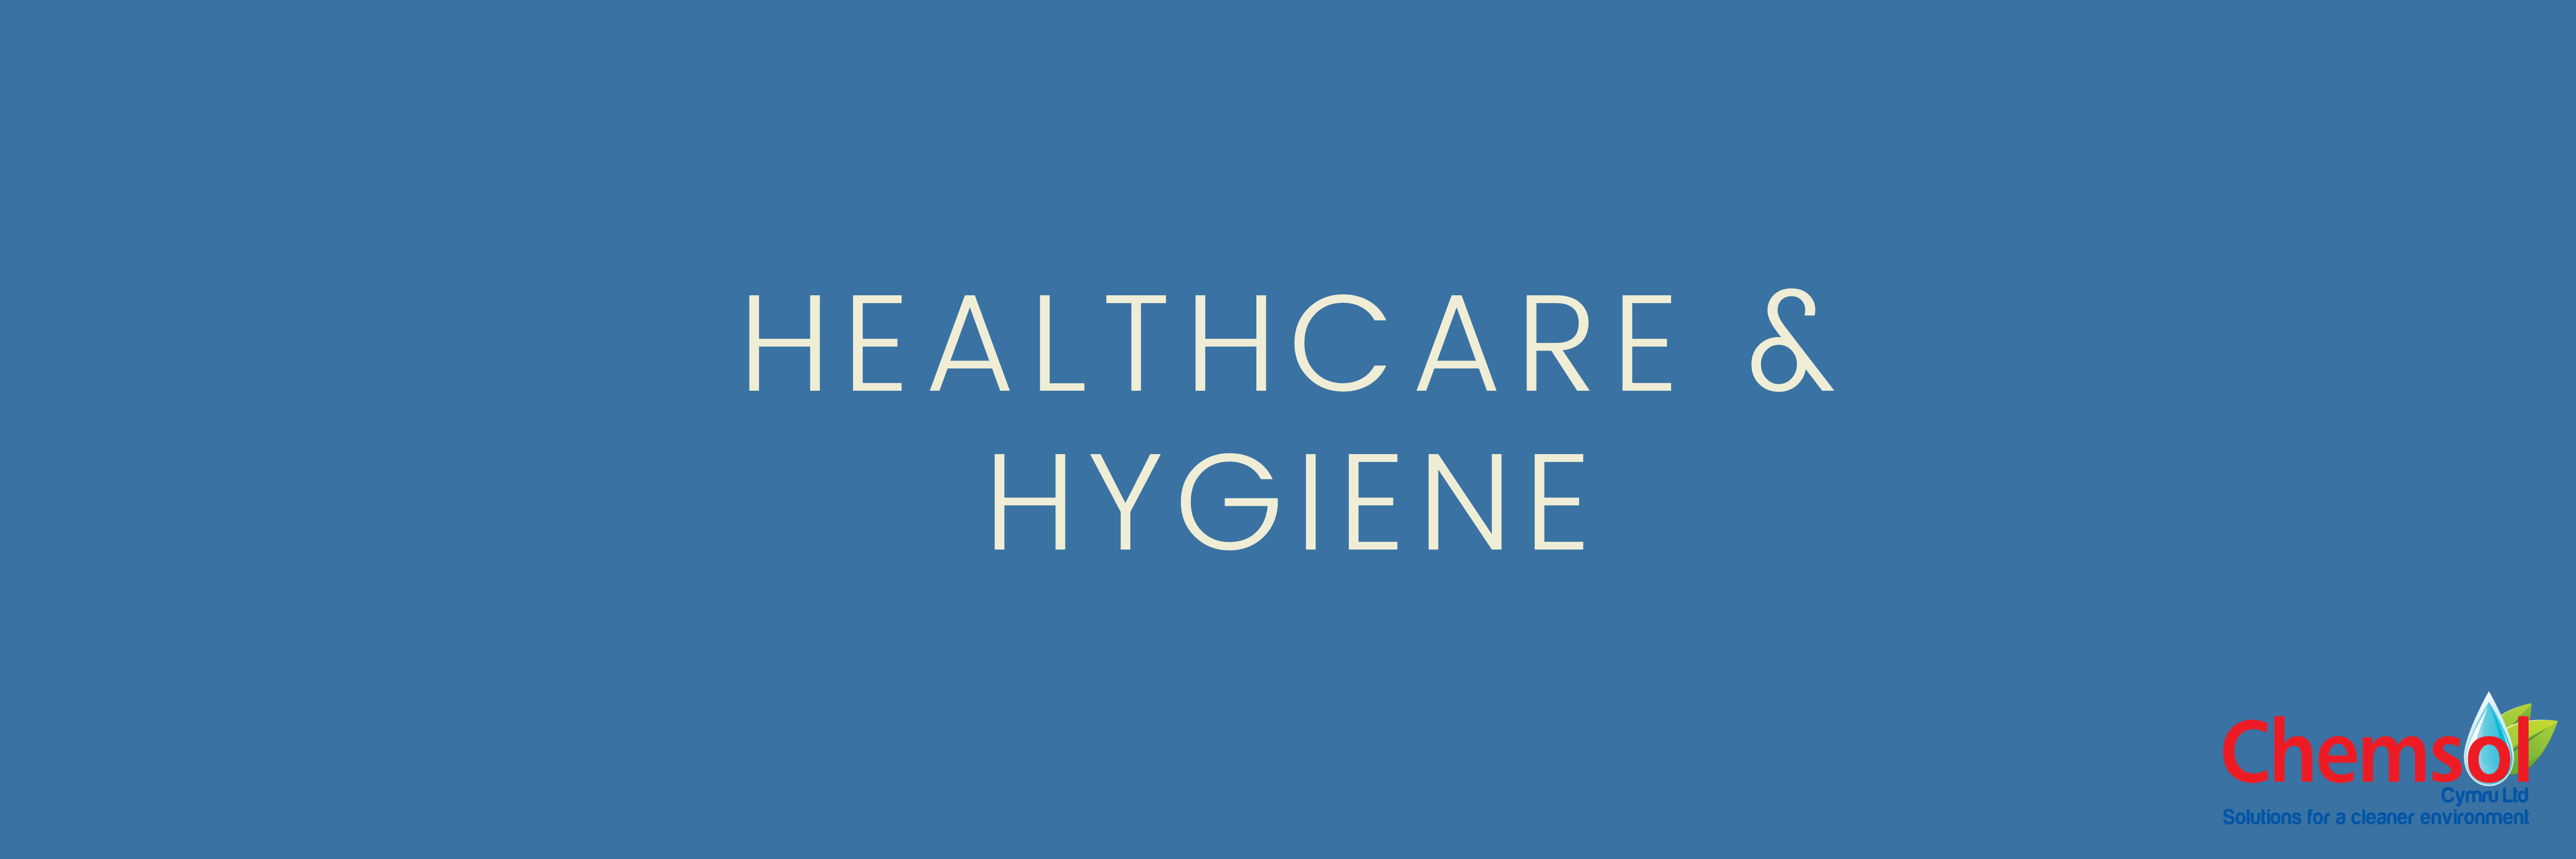 Healthcare & Hygiene 